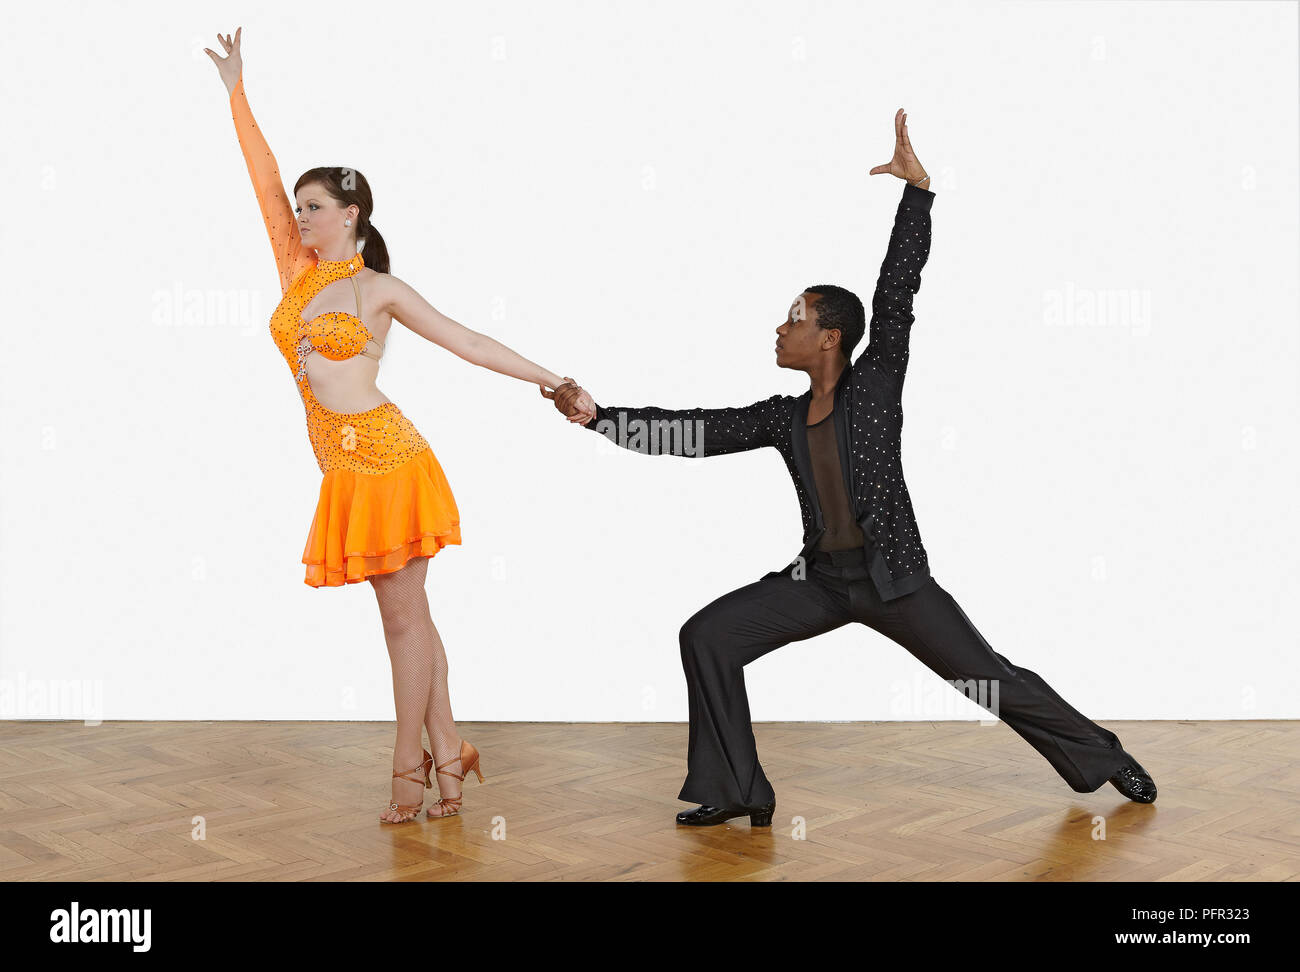 Teenage boy and girl danser la rumba Banque D'Images